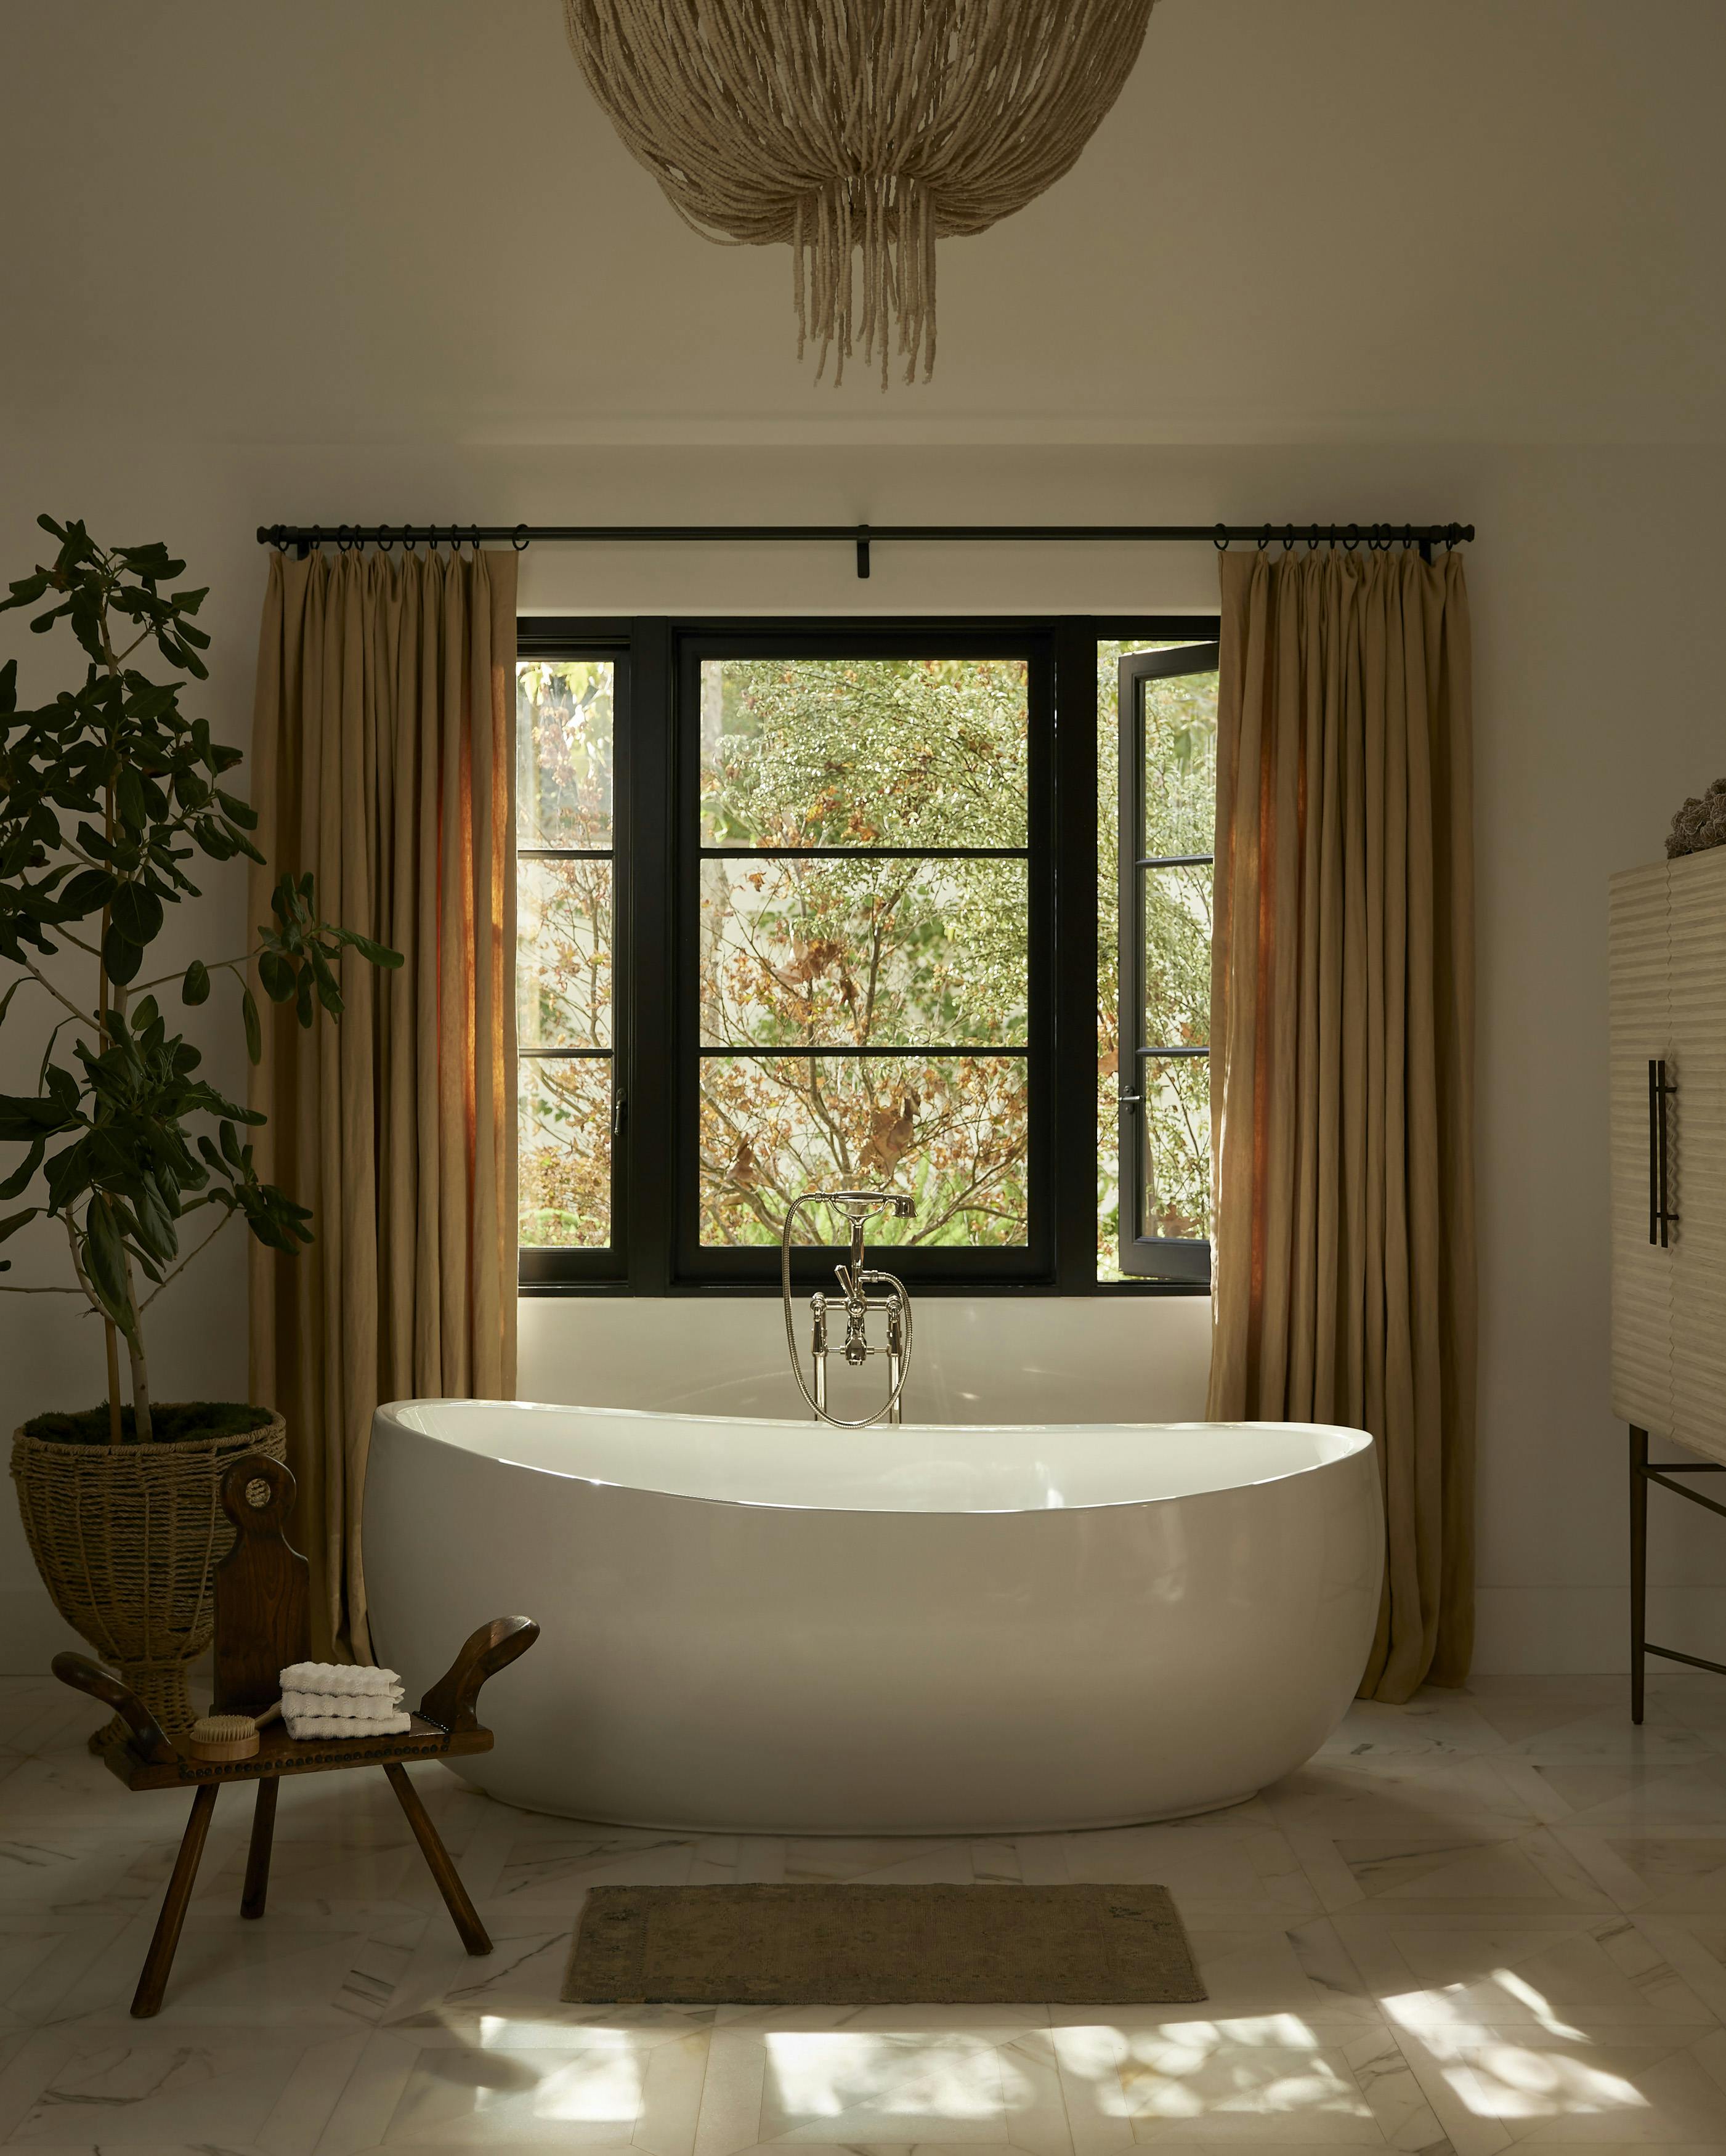 Nicole-Green-Design-Project-Shady-Canyon-Master-Bathroom-Soaking-Tub